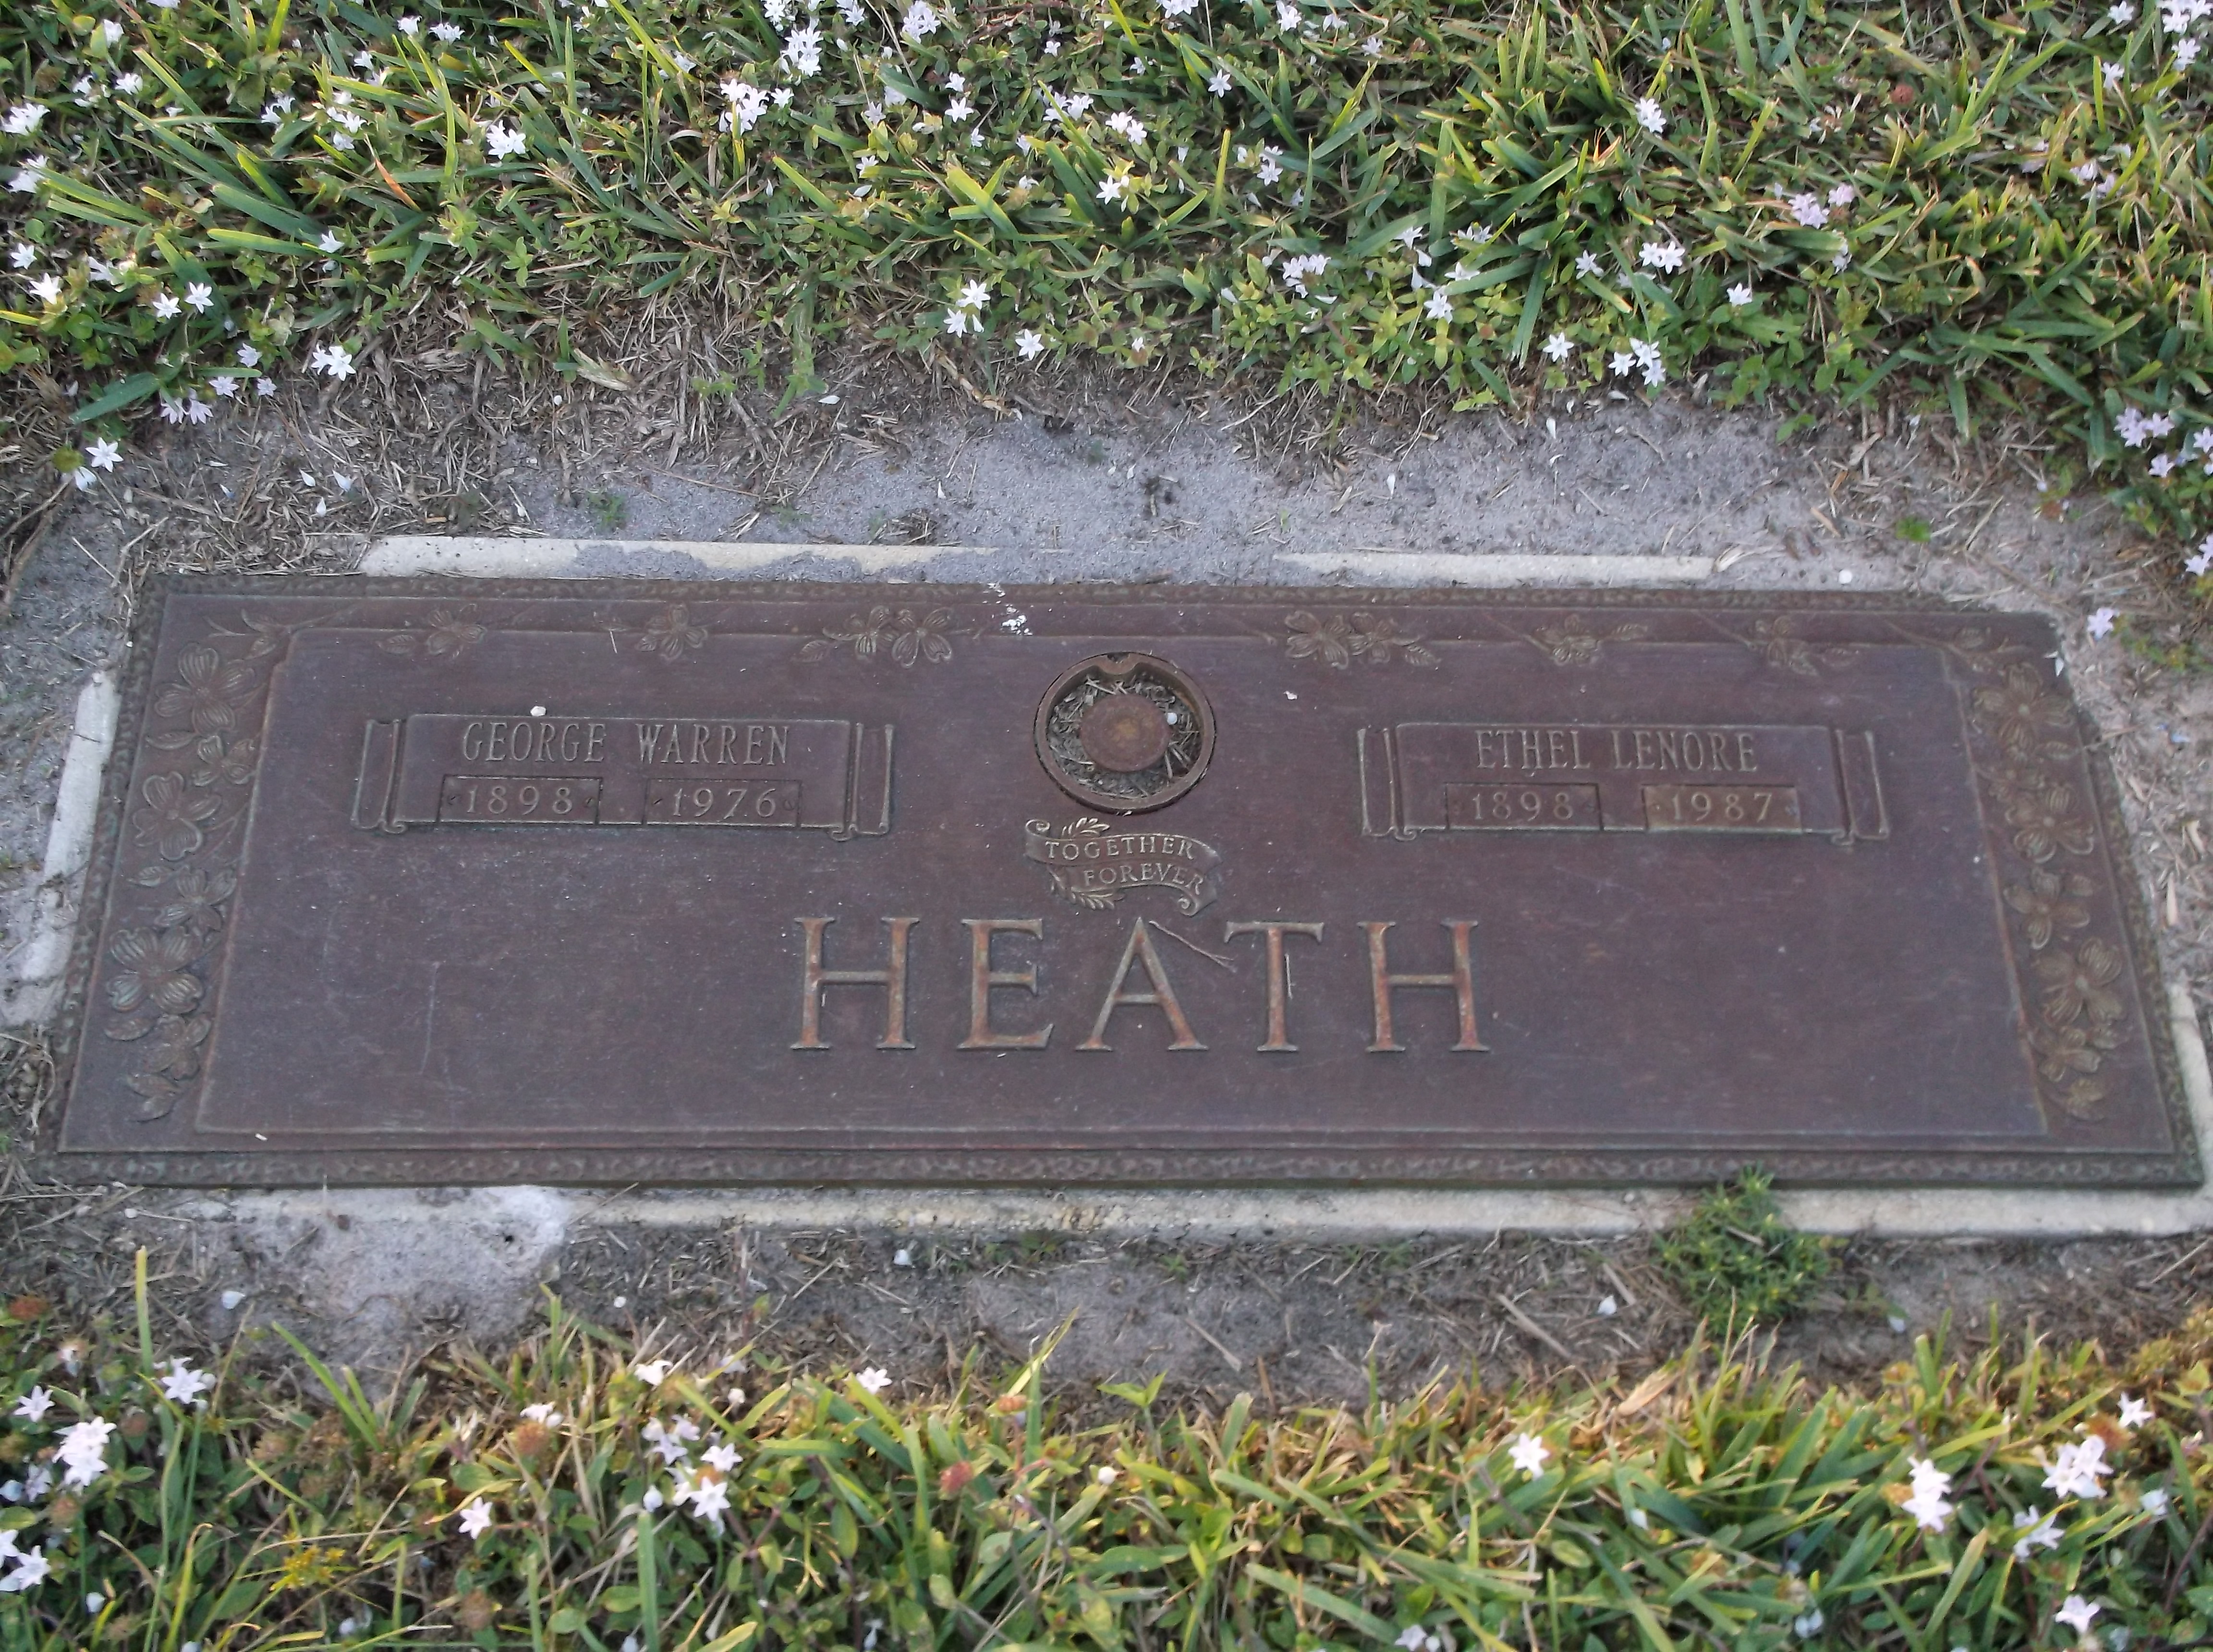 Ethel Lenore Heath